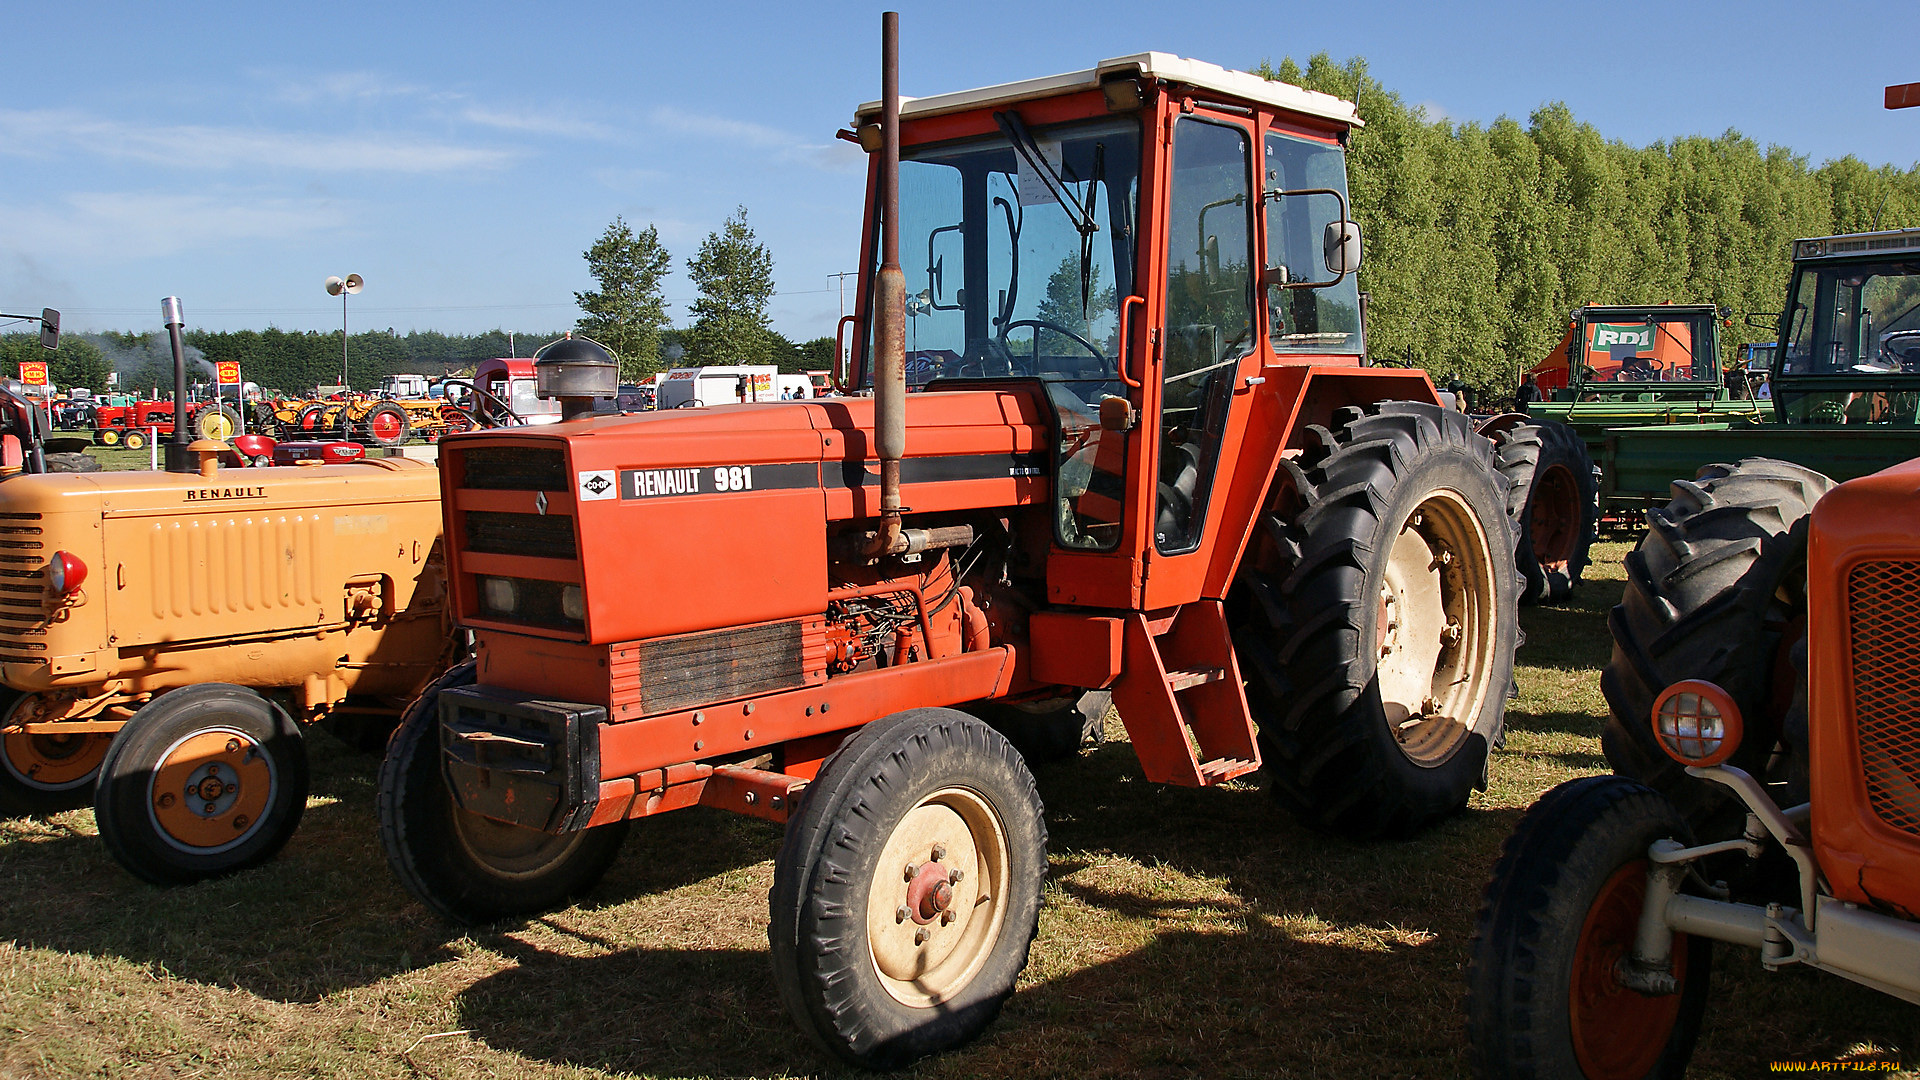 1979 renault 981 tractor, , , , 